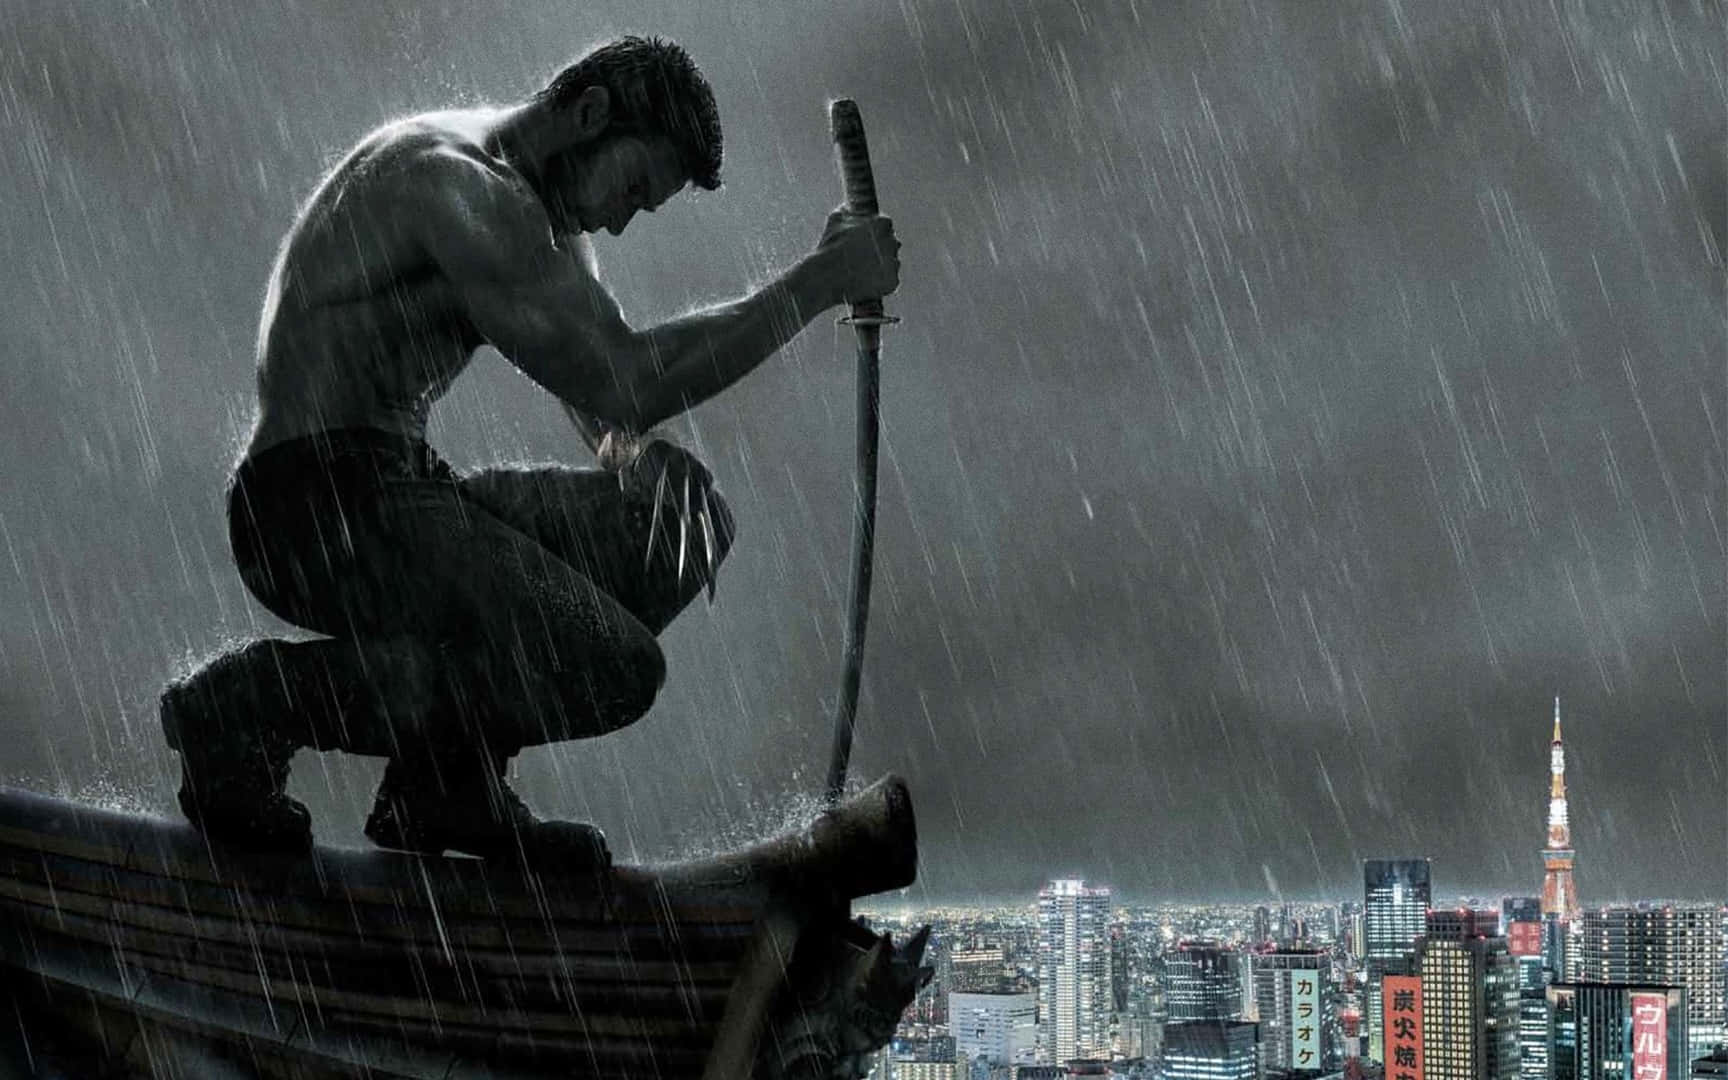 Wolverine battles for justice. Wallpaper